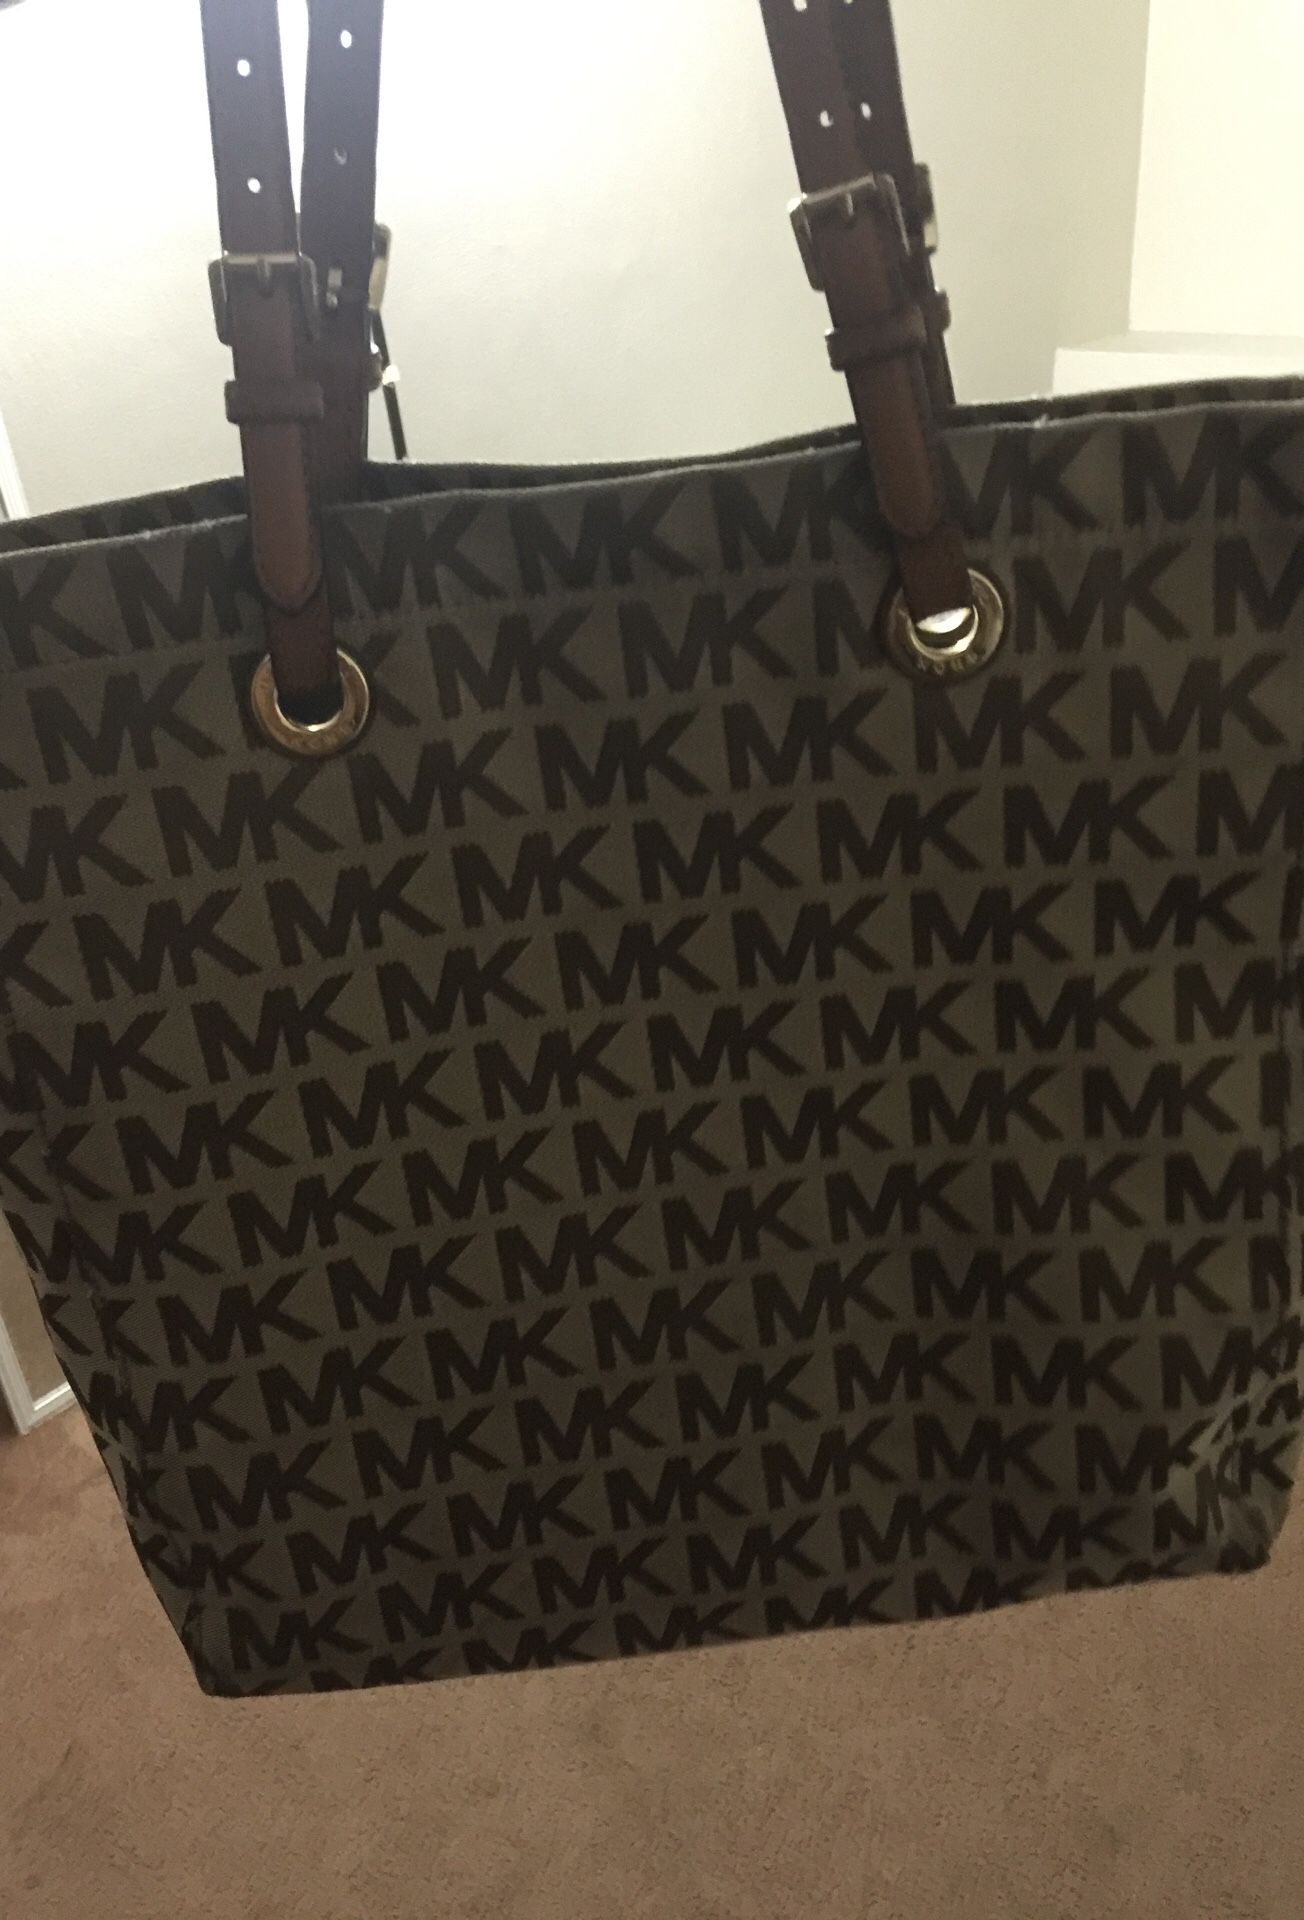 Mk purse